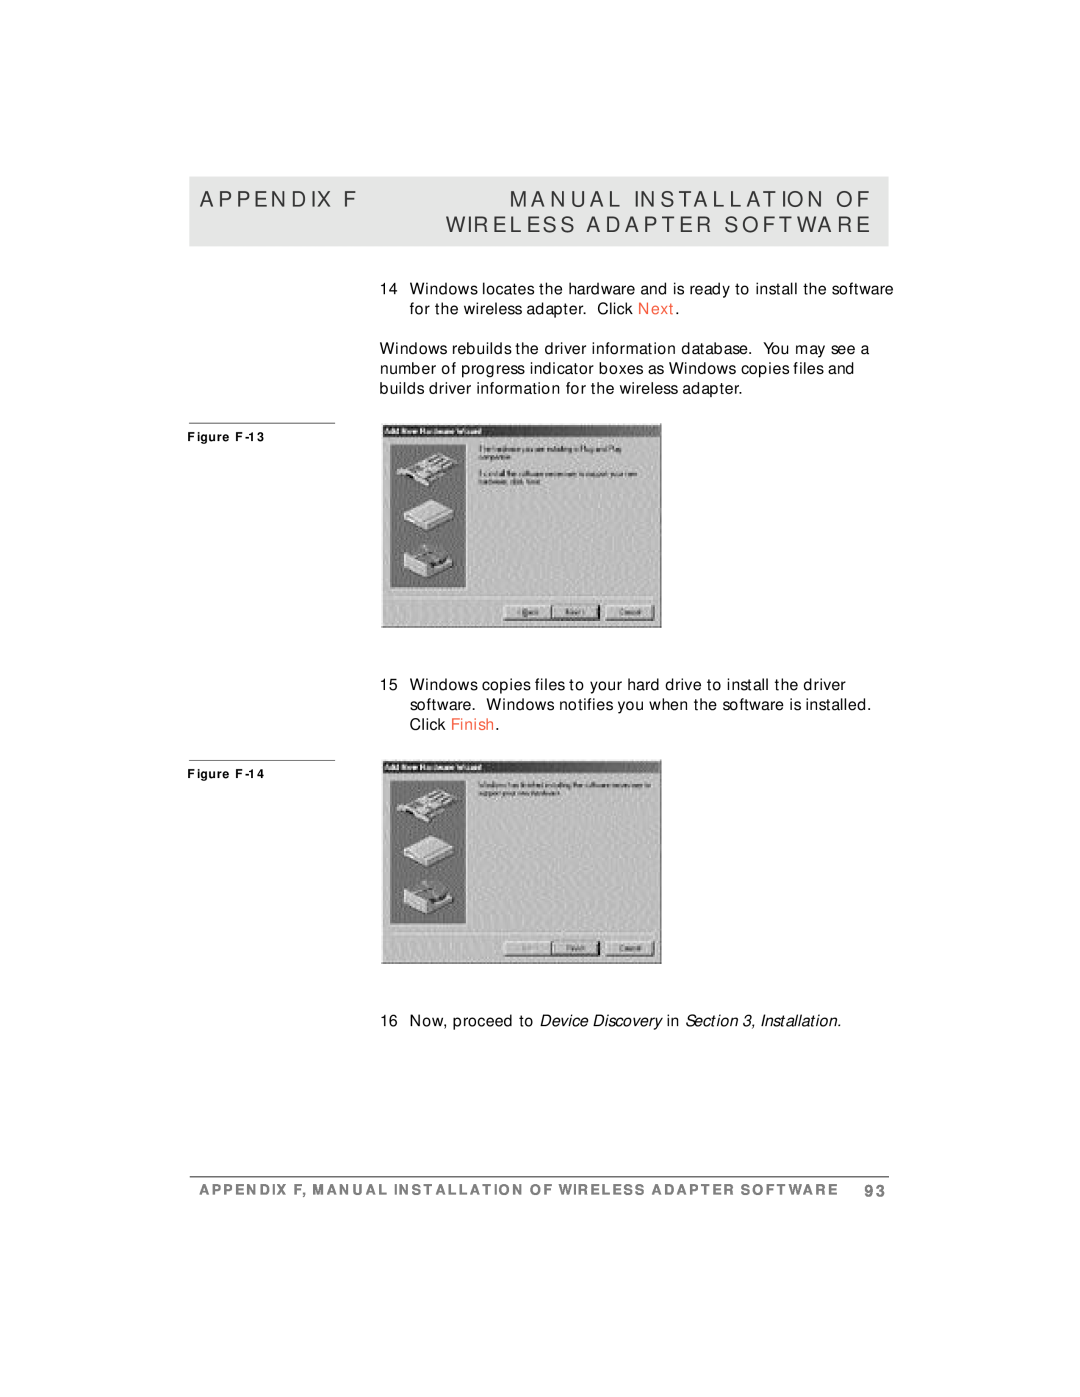 Motorola simplefi manual Appendix F, Manual Installation Of, Wireless Adapter Software, Figure F-13, Figure F-14 